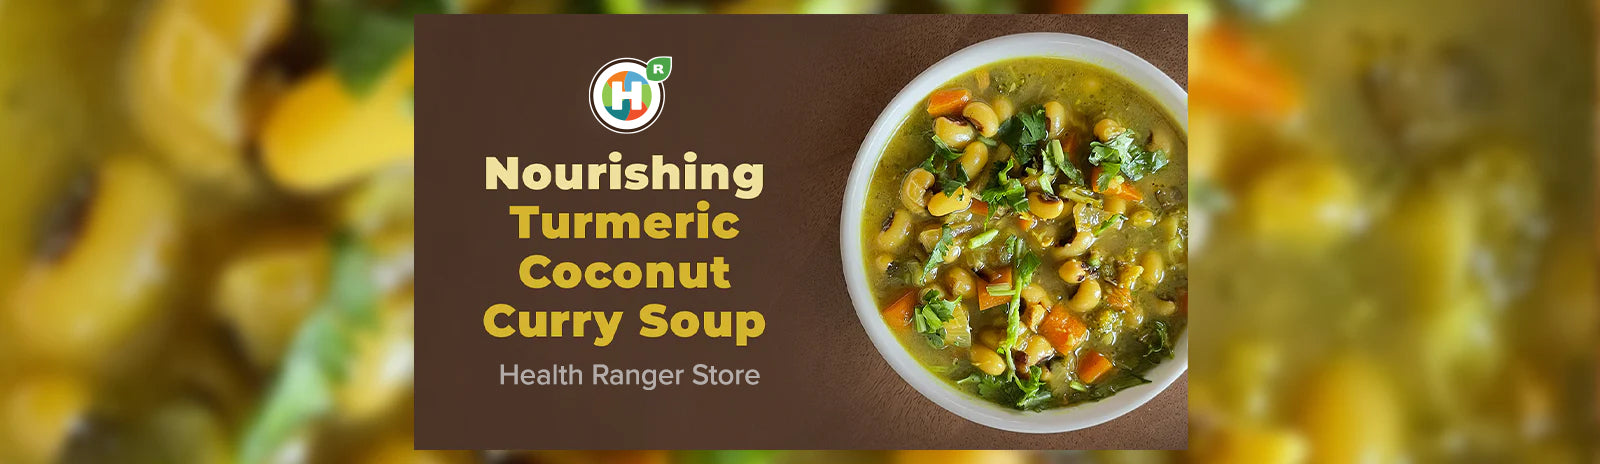 Nourishing Turmeric Coconut Curry Soup